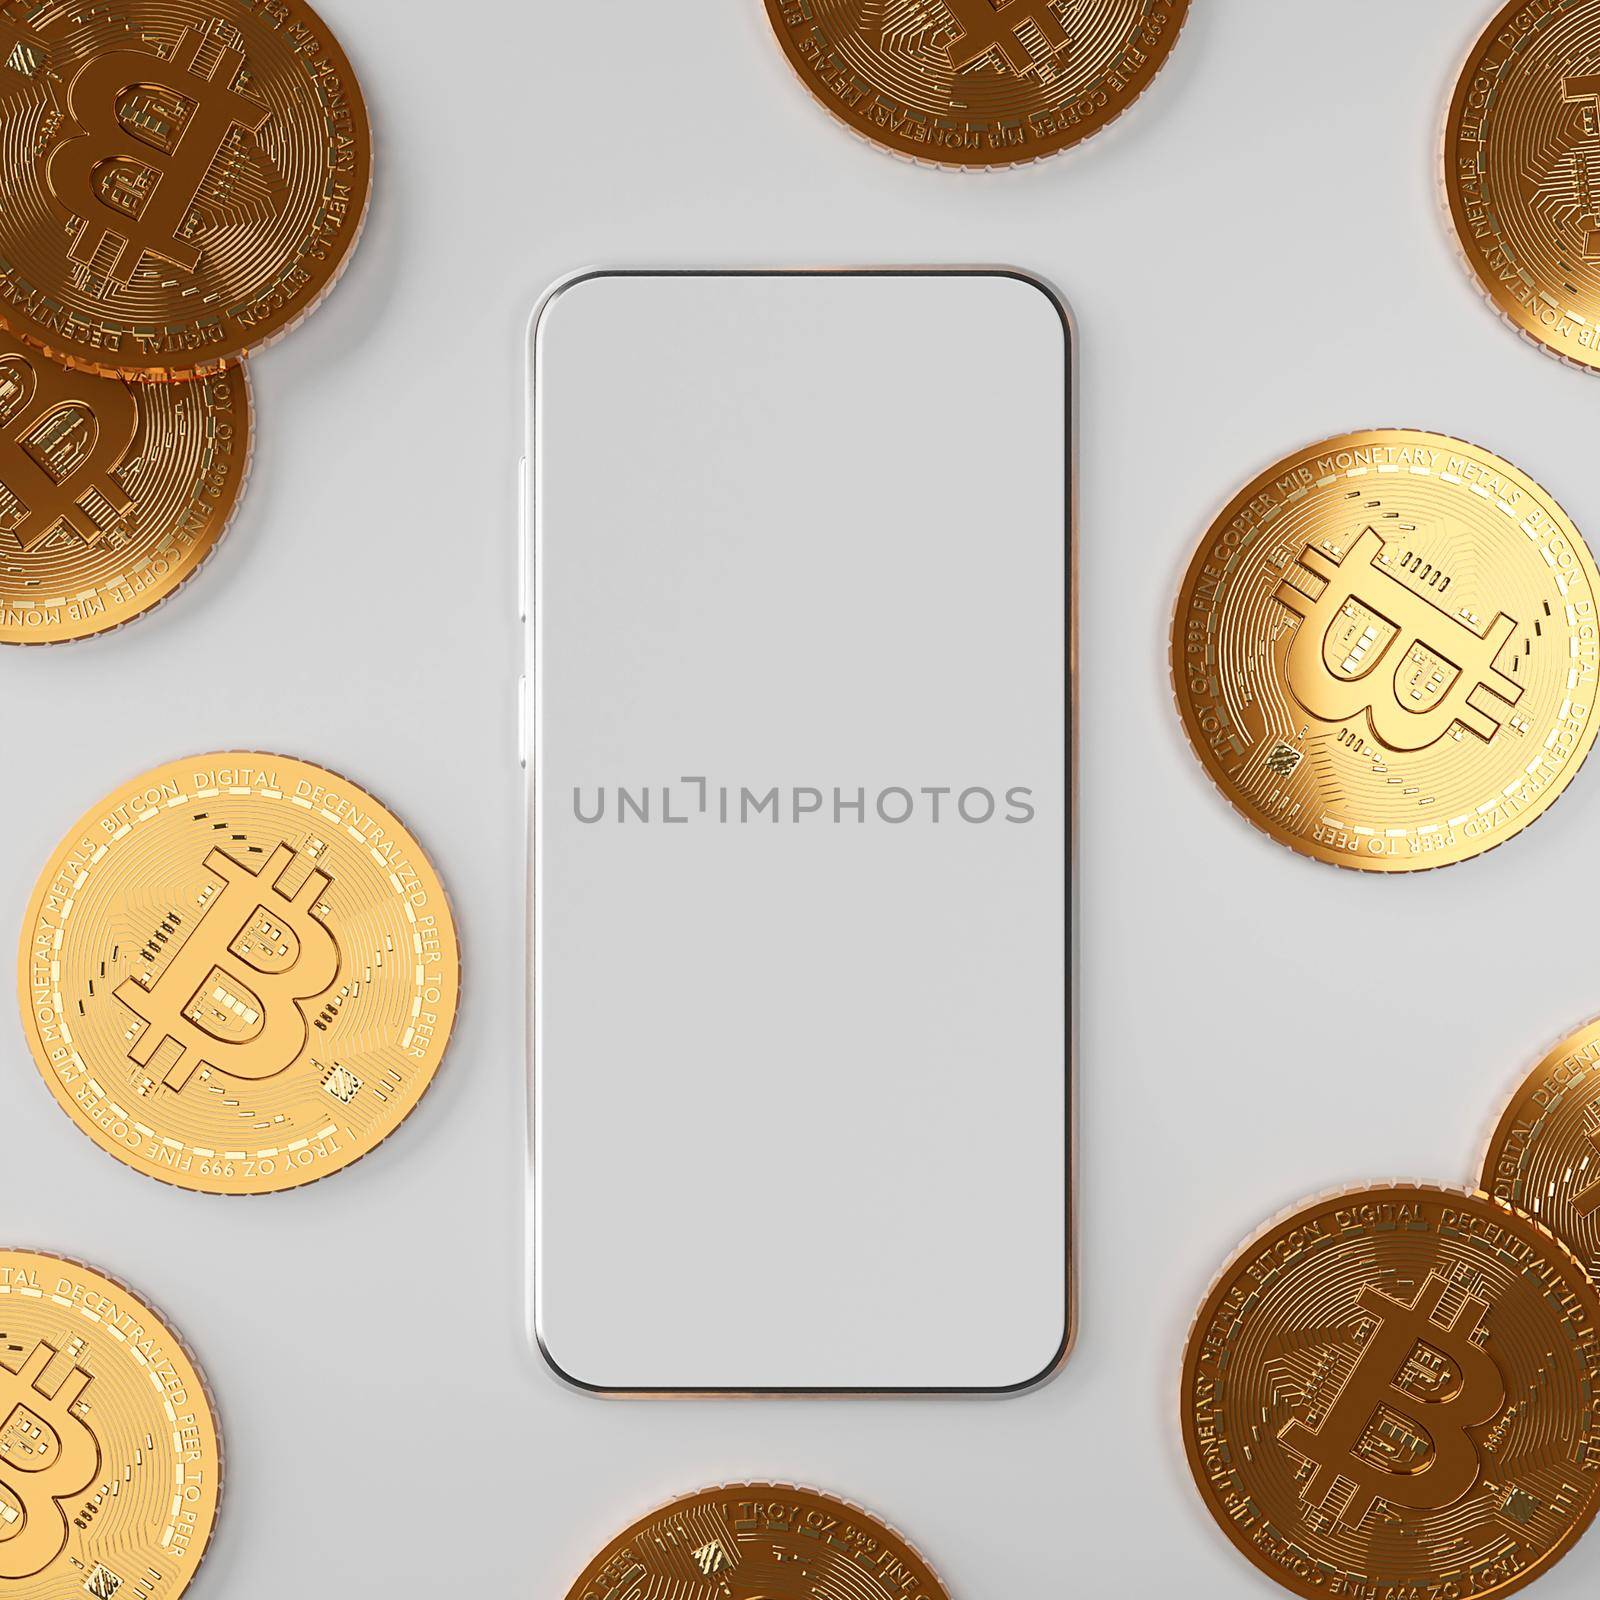 Blockchain cyptocurrency Bitcoin BTC with smartphone mockup, 3d illustration by nutzchotwarut